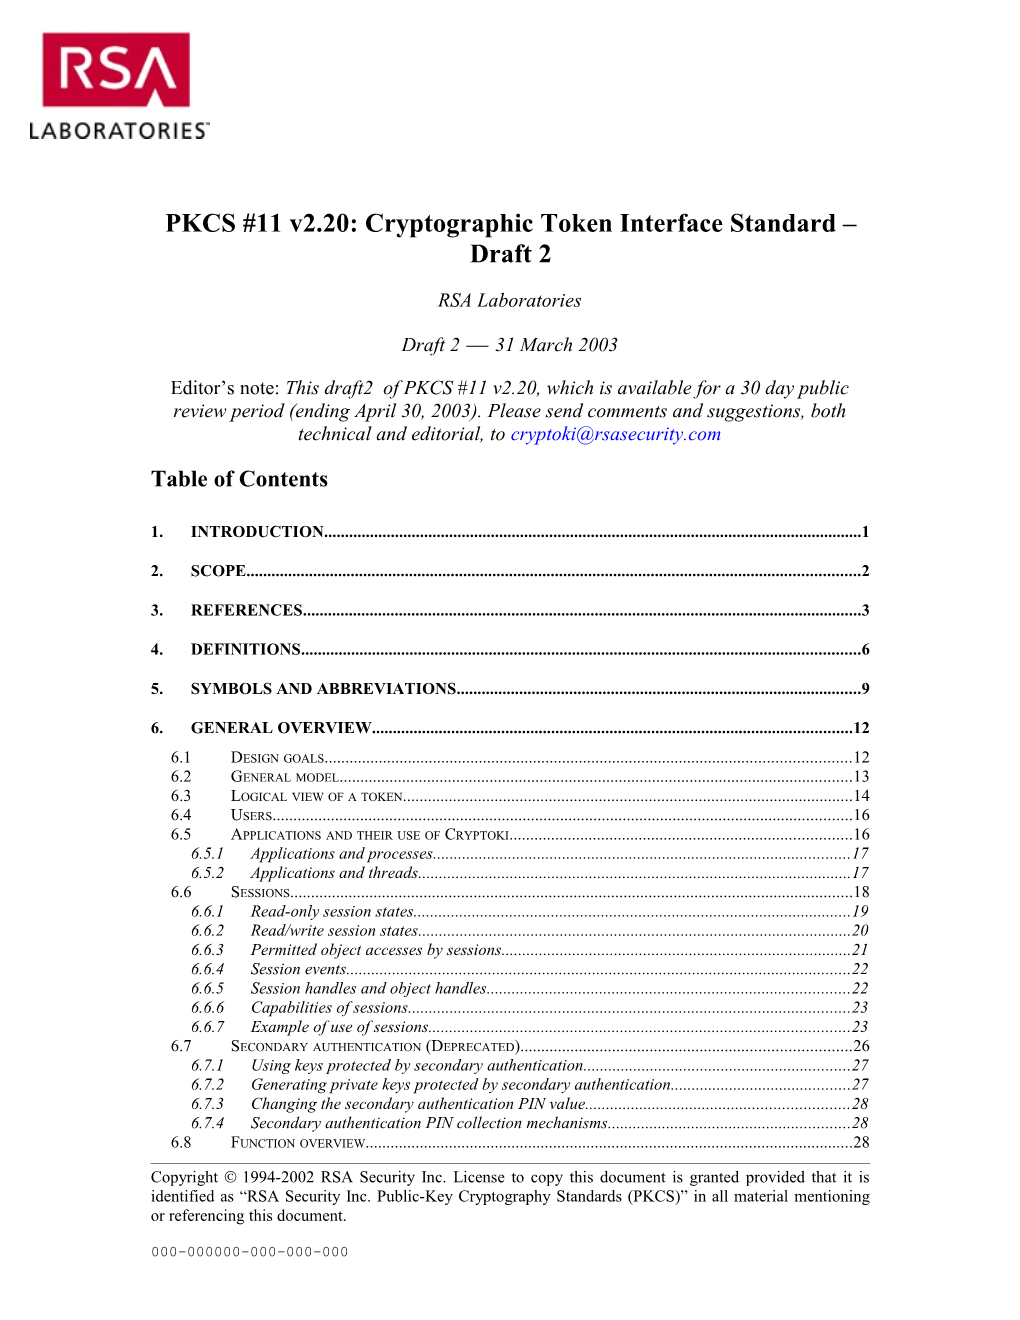 PKCS #11 V2.11 R1: Cryptographic Token Interface Standard